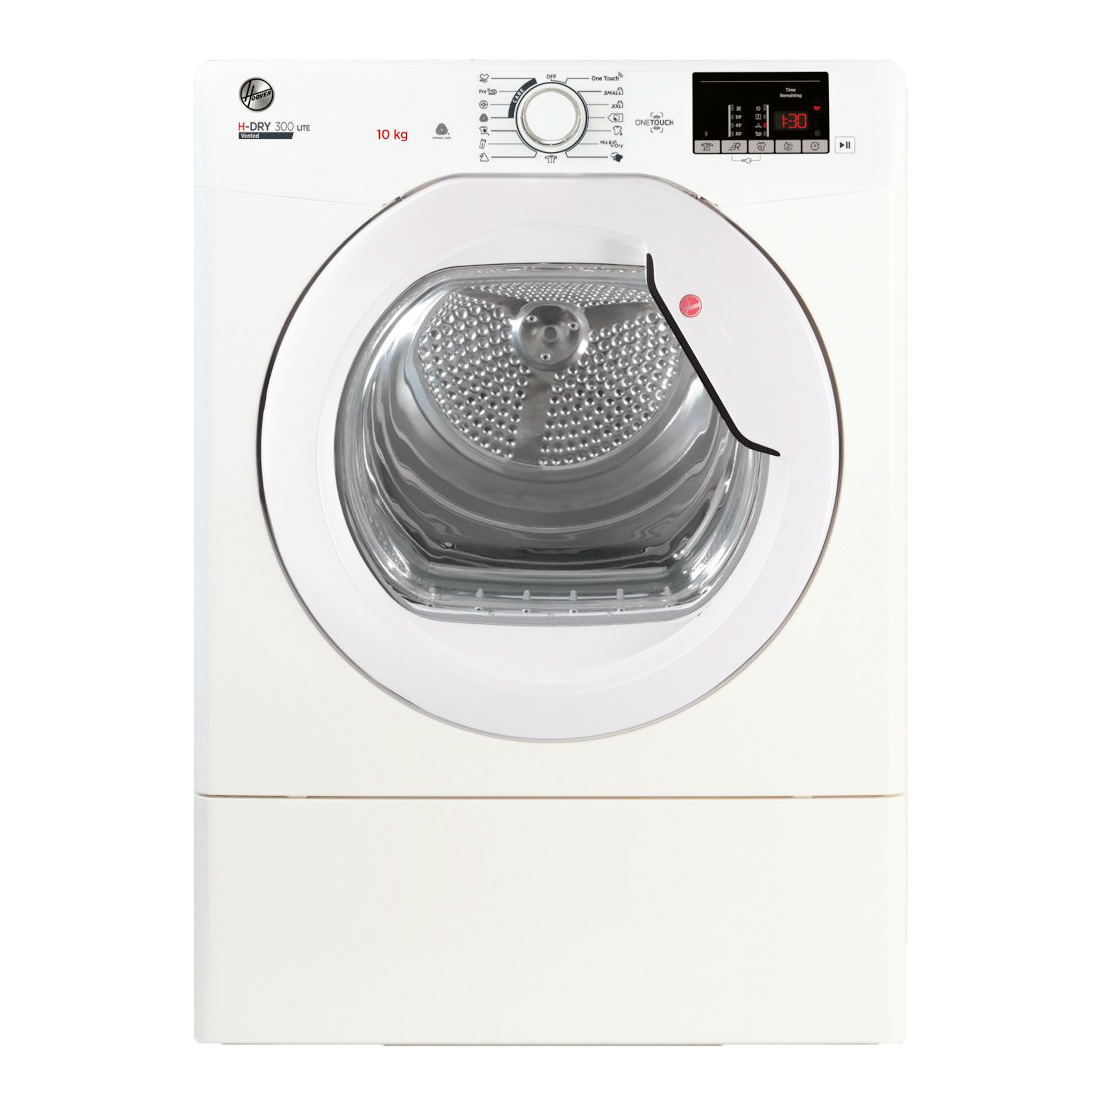 Image of Hoover HLEV10DG 10Kg Vented Dryer in White C Rated Sensor NFC